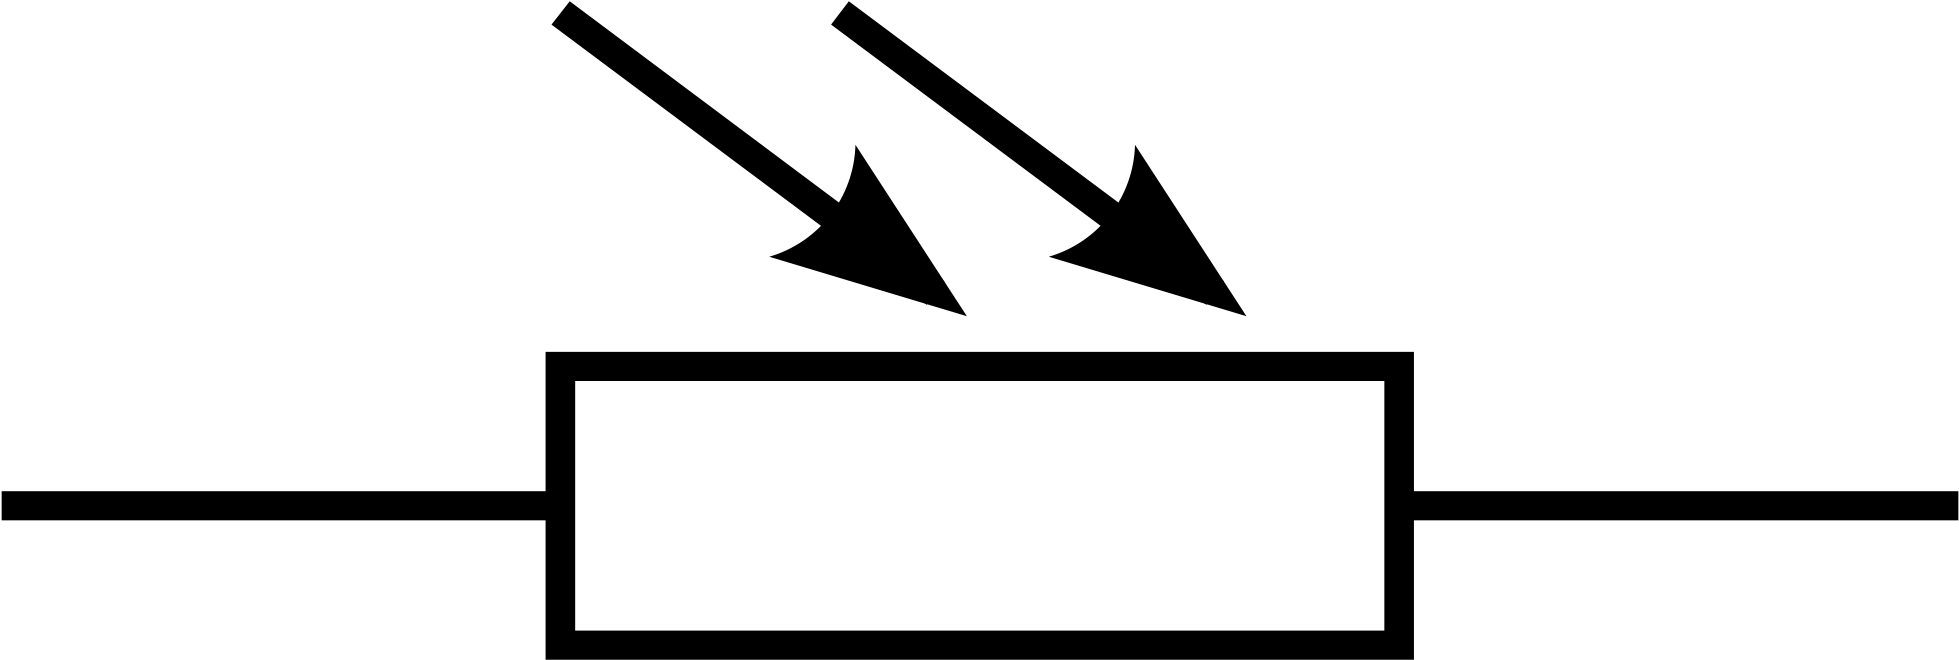 Light-dependent Resistor Schematic Symbol - Light Dependent Resistor Symbol (2000x667)